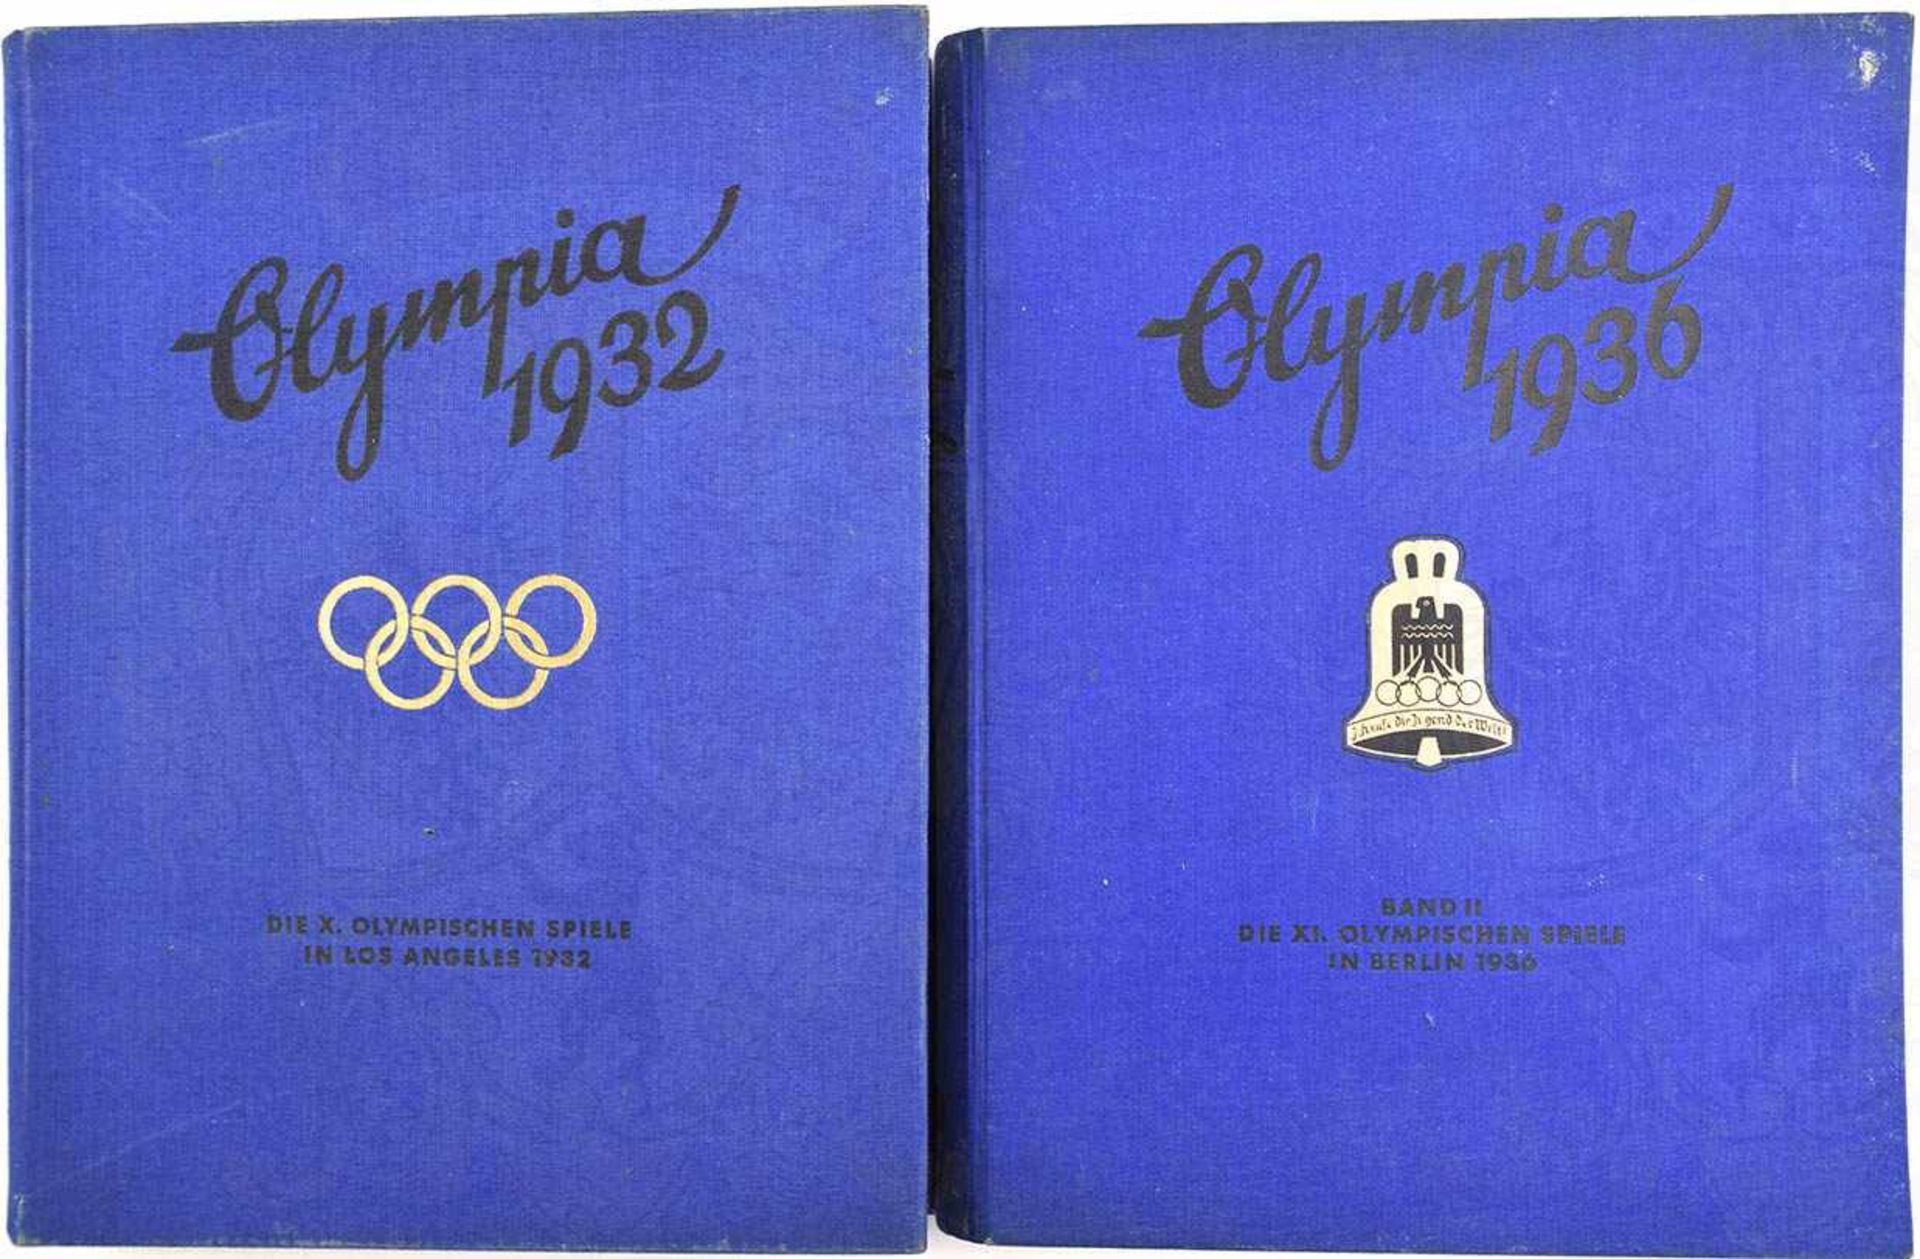 7 ALBEN OLYMPIA 1932/1936, alle kpl., 2x „Olympia 1936“, Bd. 1; 3x „Olympia 1936“, Bd. 2; 2x „